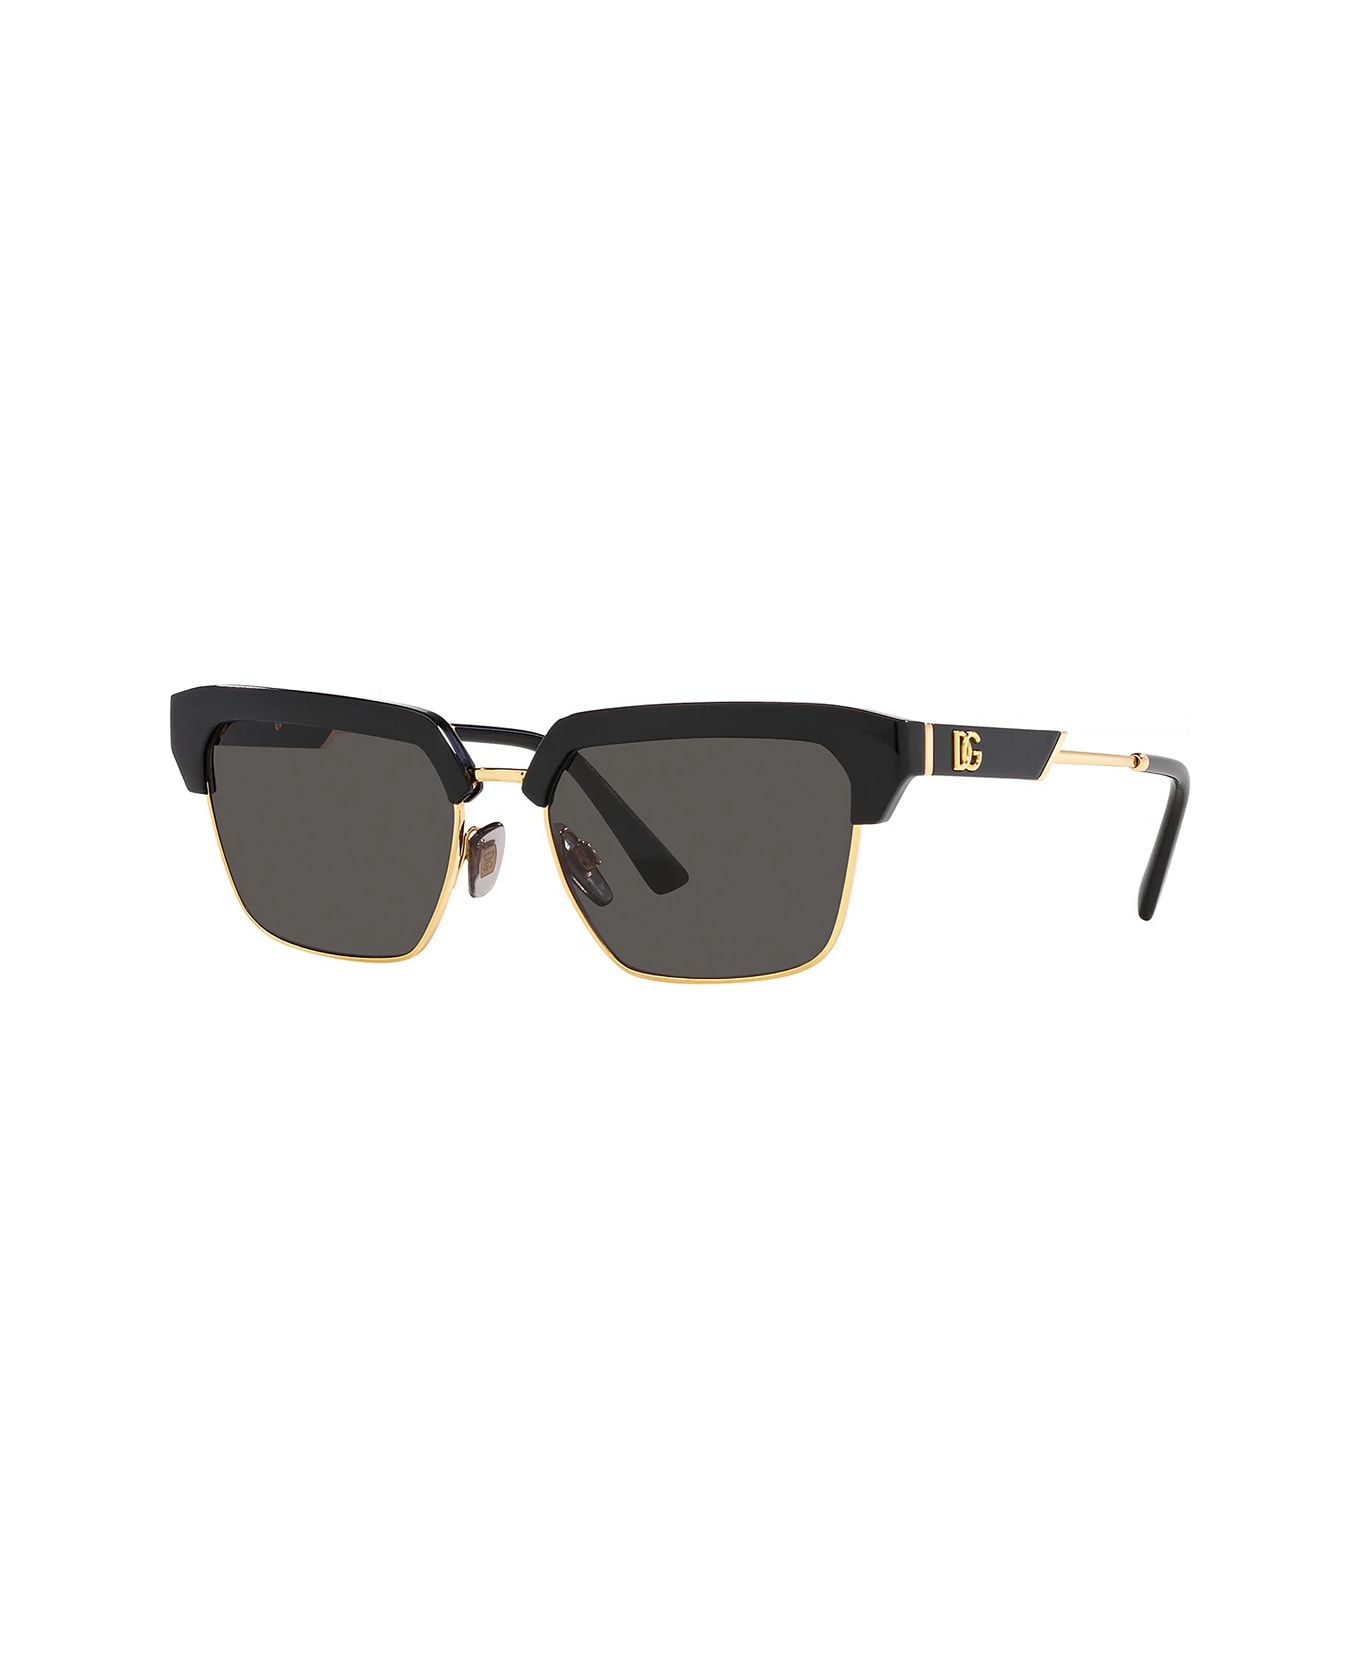 Dolce & Gabbana Eyewear Dg6185 501/87 Sunglasses - Nero サングラス